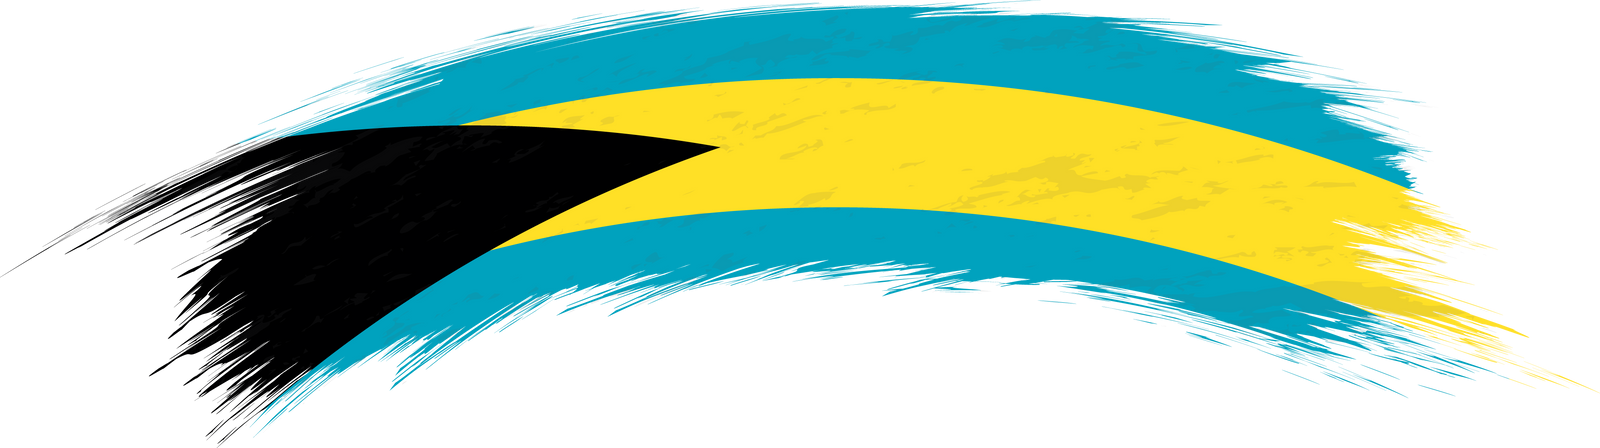 Flag of The Bahamas in rounded grunge brush stroke.